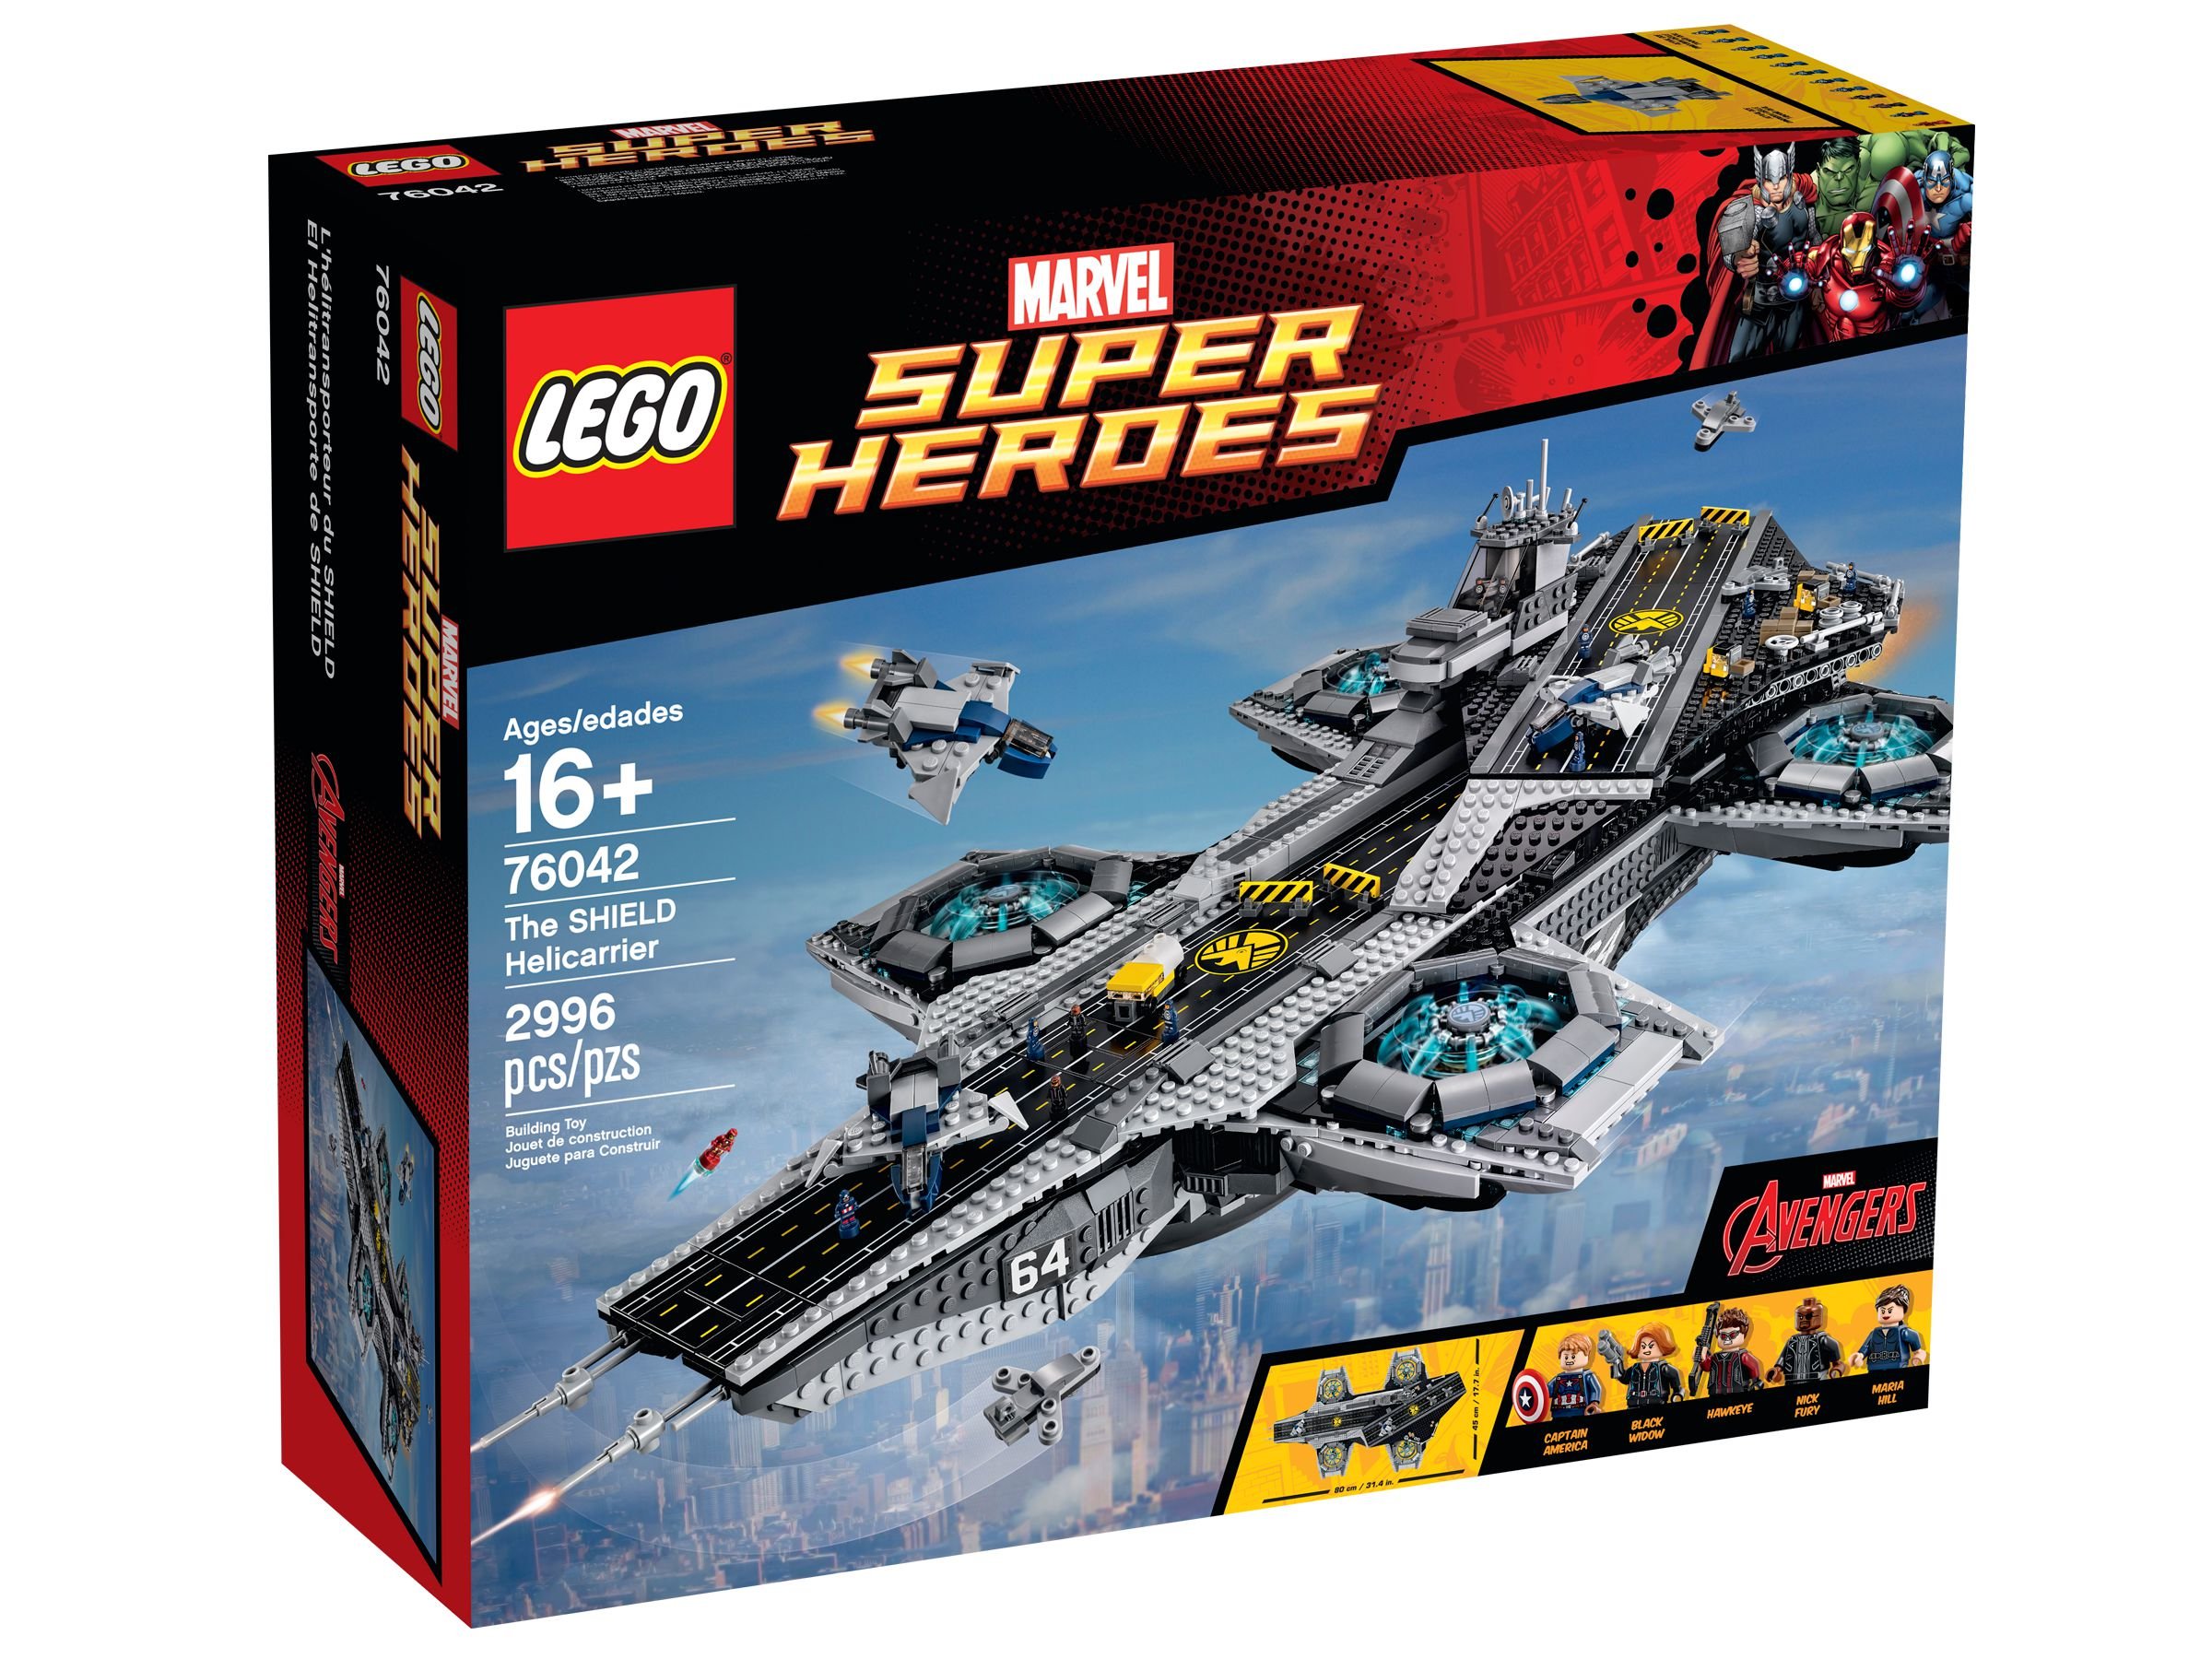 LEGO Super Heroes 76042 UCS Avengers SHIELD Helicarrier LEGO_76042_alt1.jpg